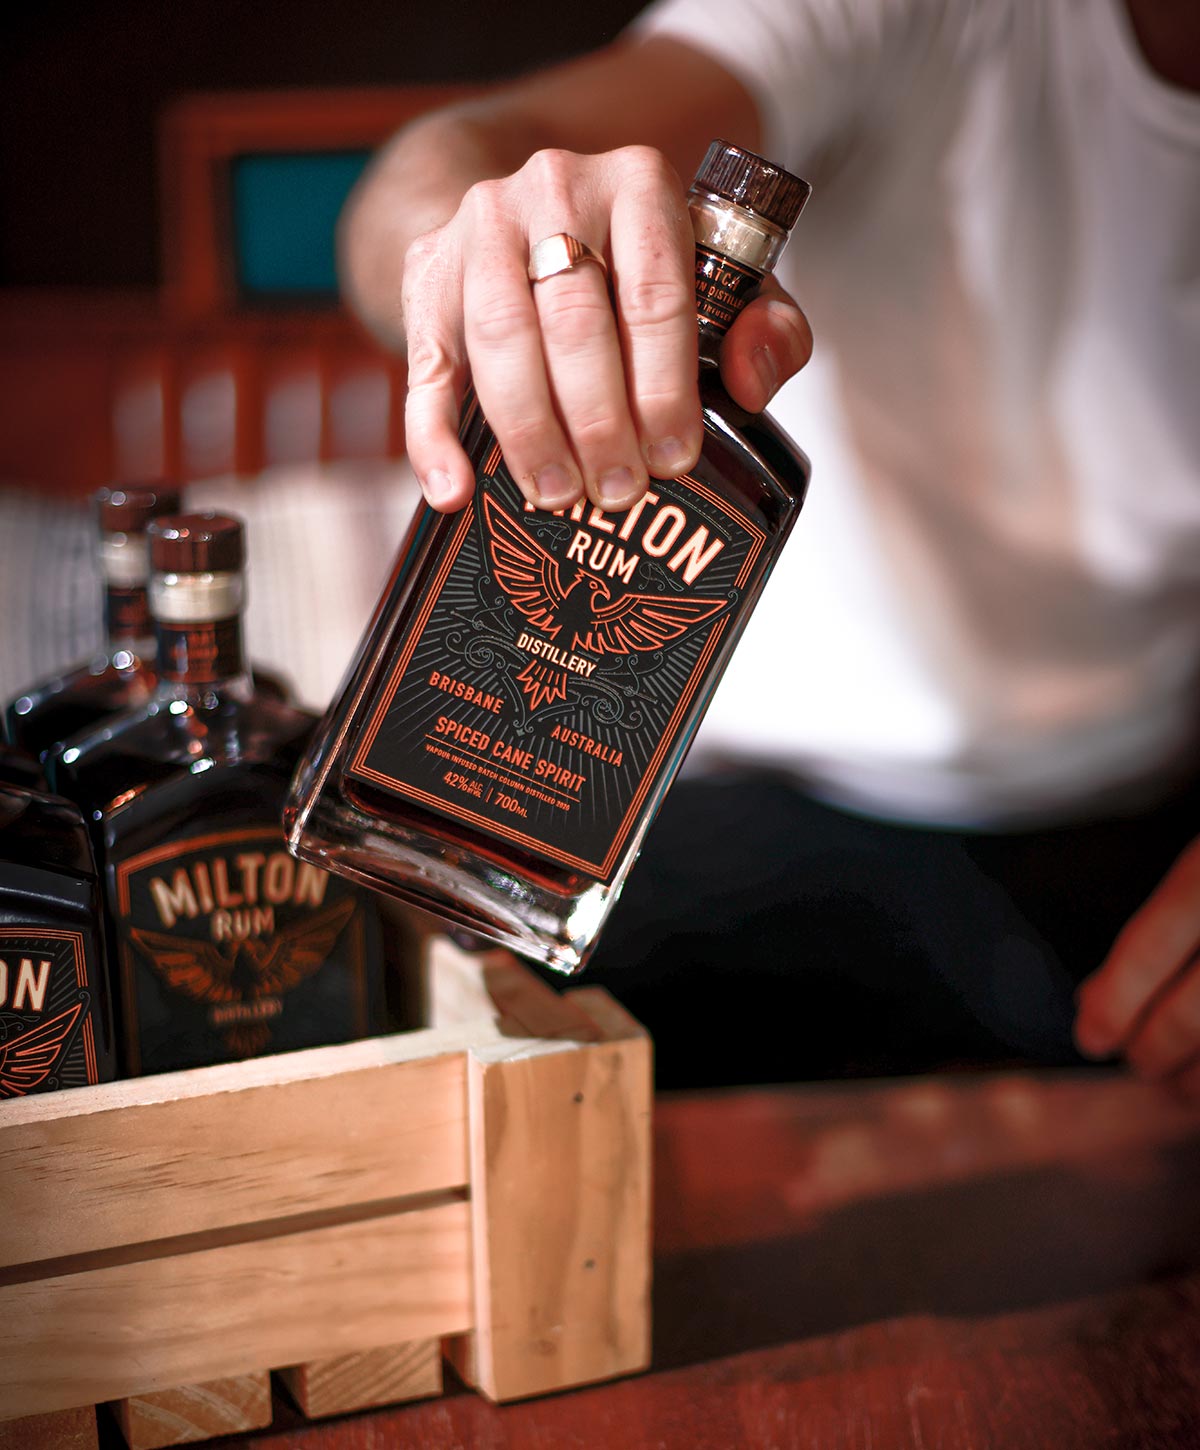 Milton Rum Bottle 4